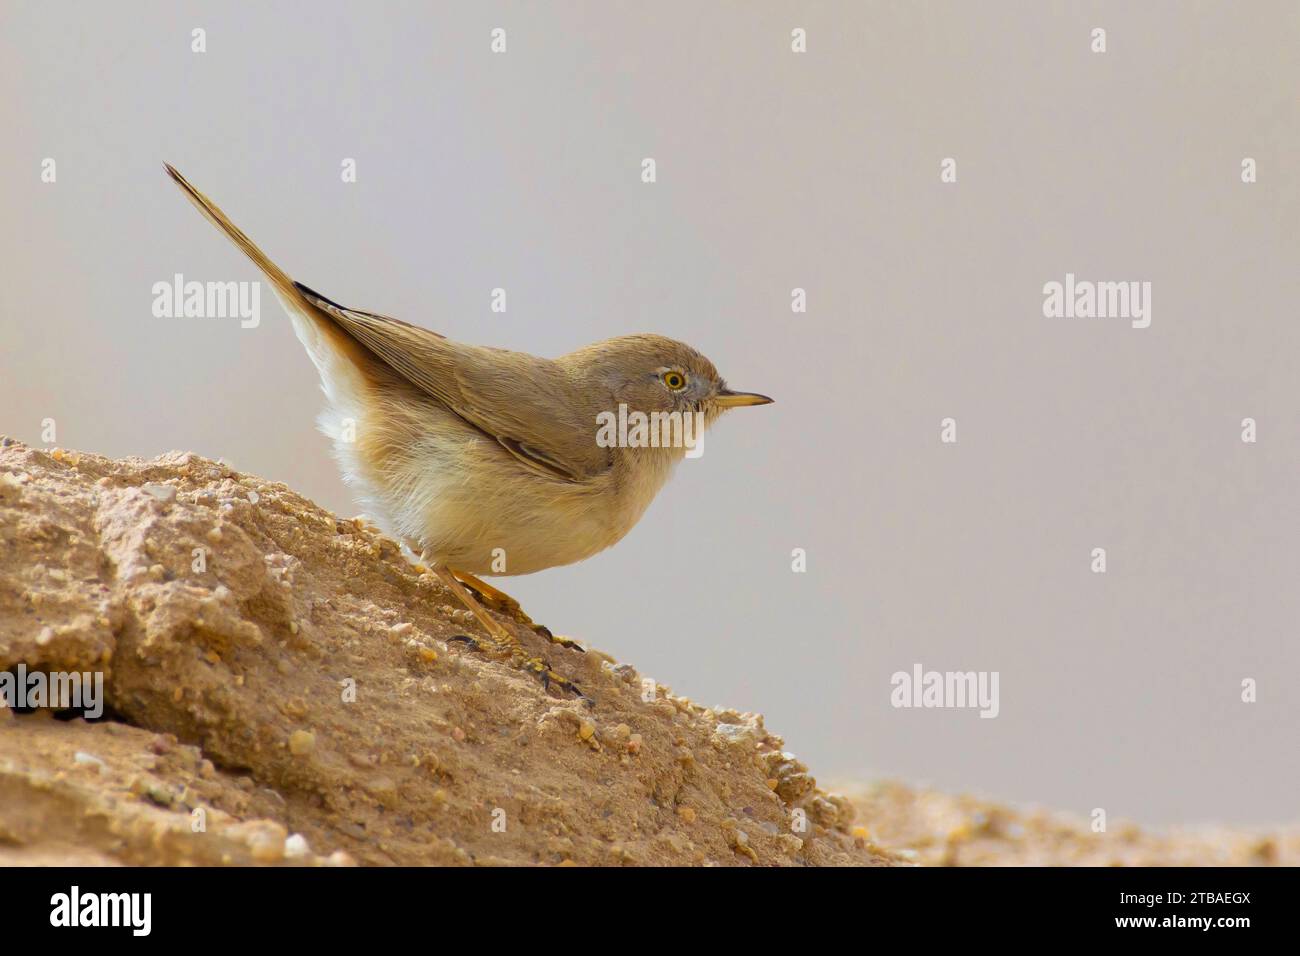 Asian desert warbler (Sylvia nana), perching on soil, side view, Kuwait Stock Photo